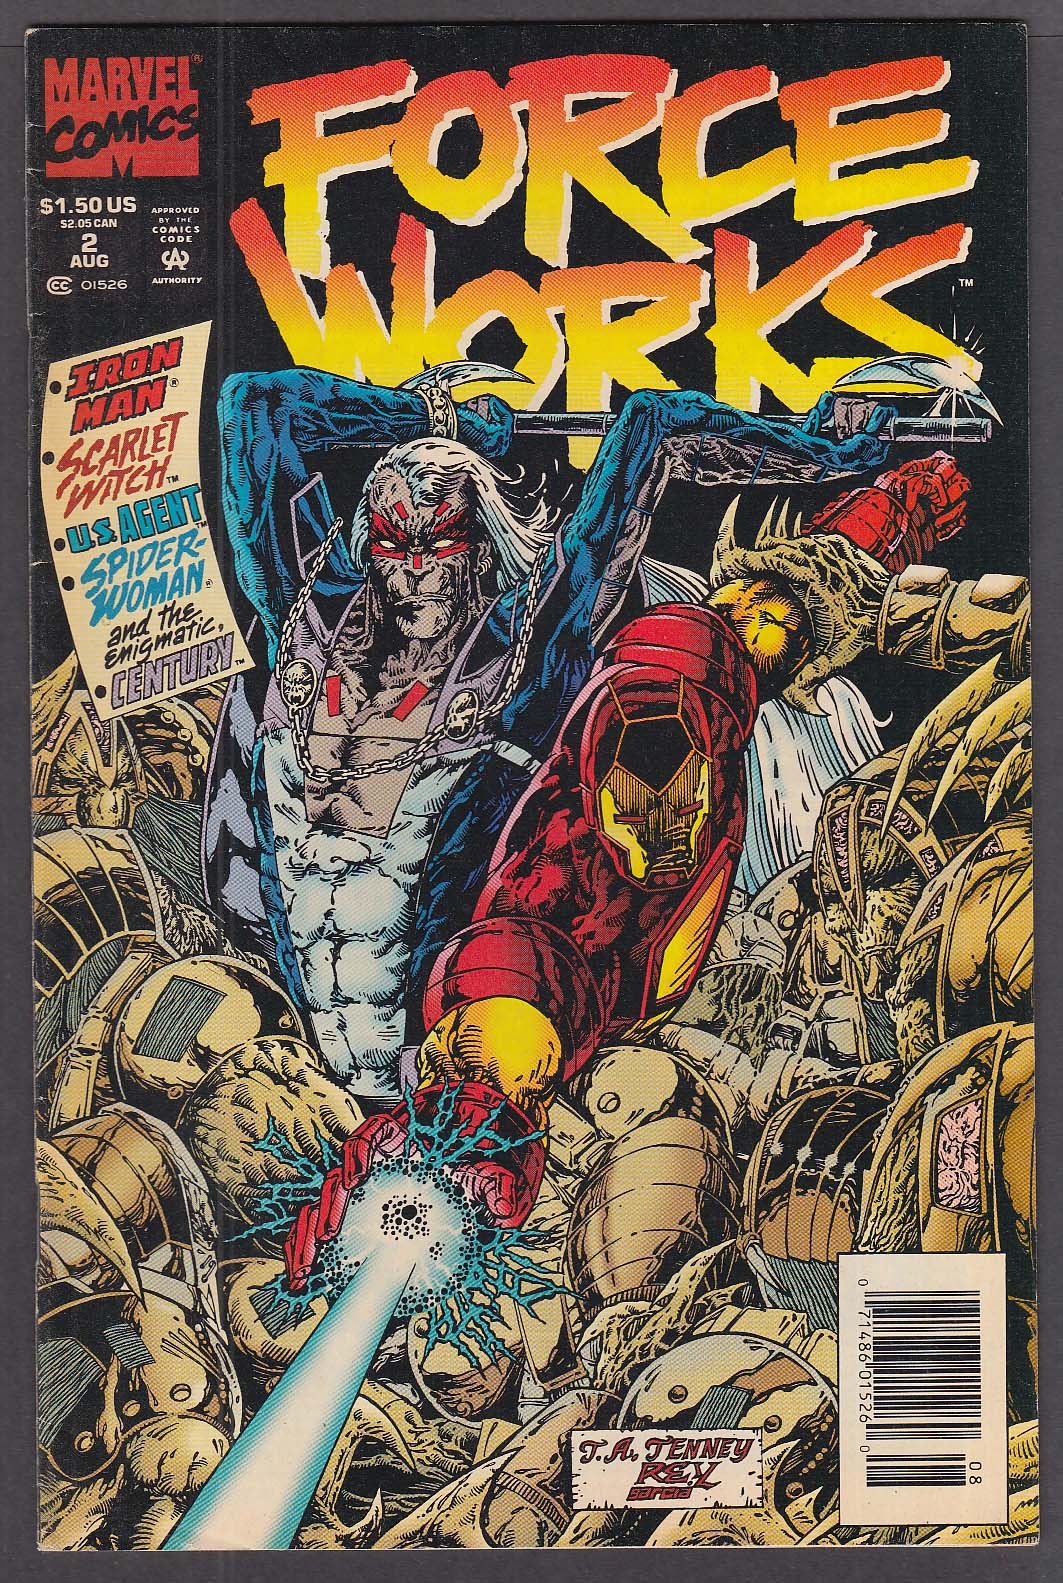 Forced works is. Железный человек 1994 комикс. Marvel 1994 Iron man. Force work коллекция. Force work pas что там.